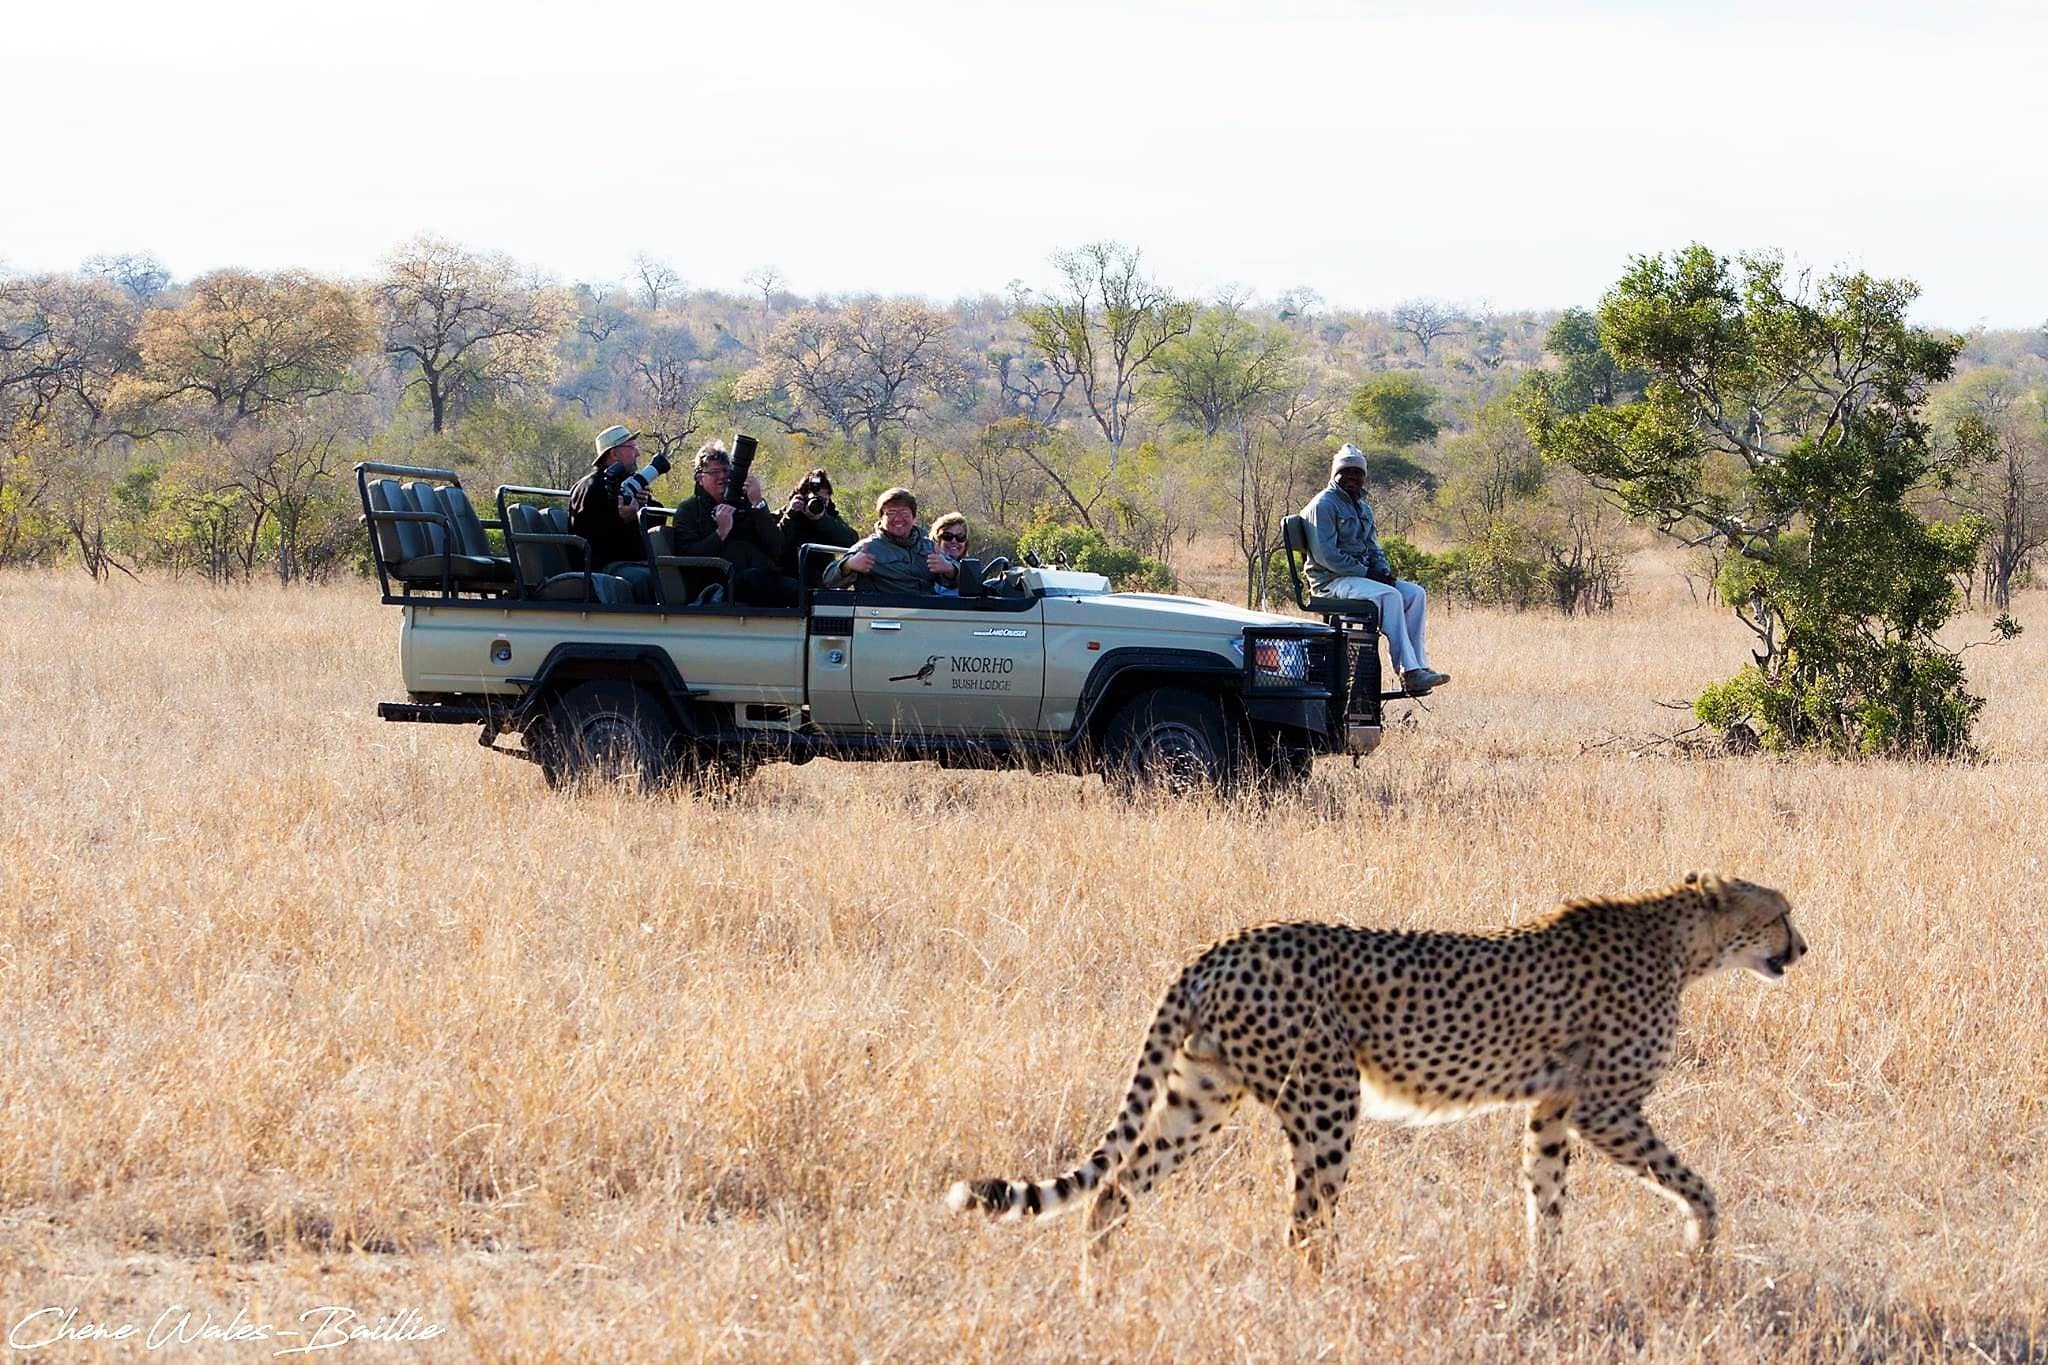 Cheetah on drive at Nkorho